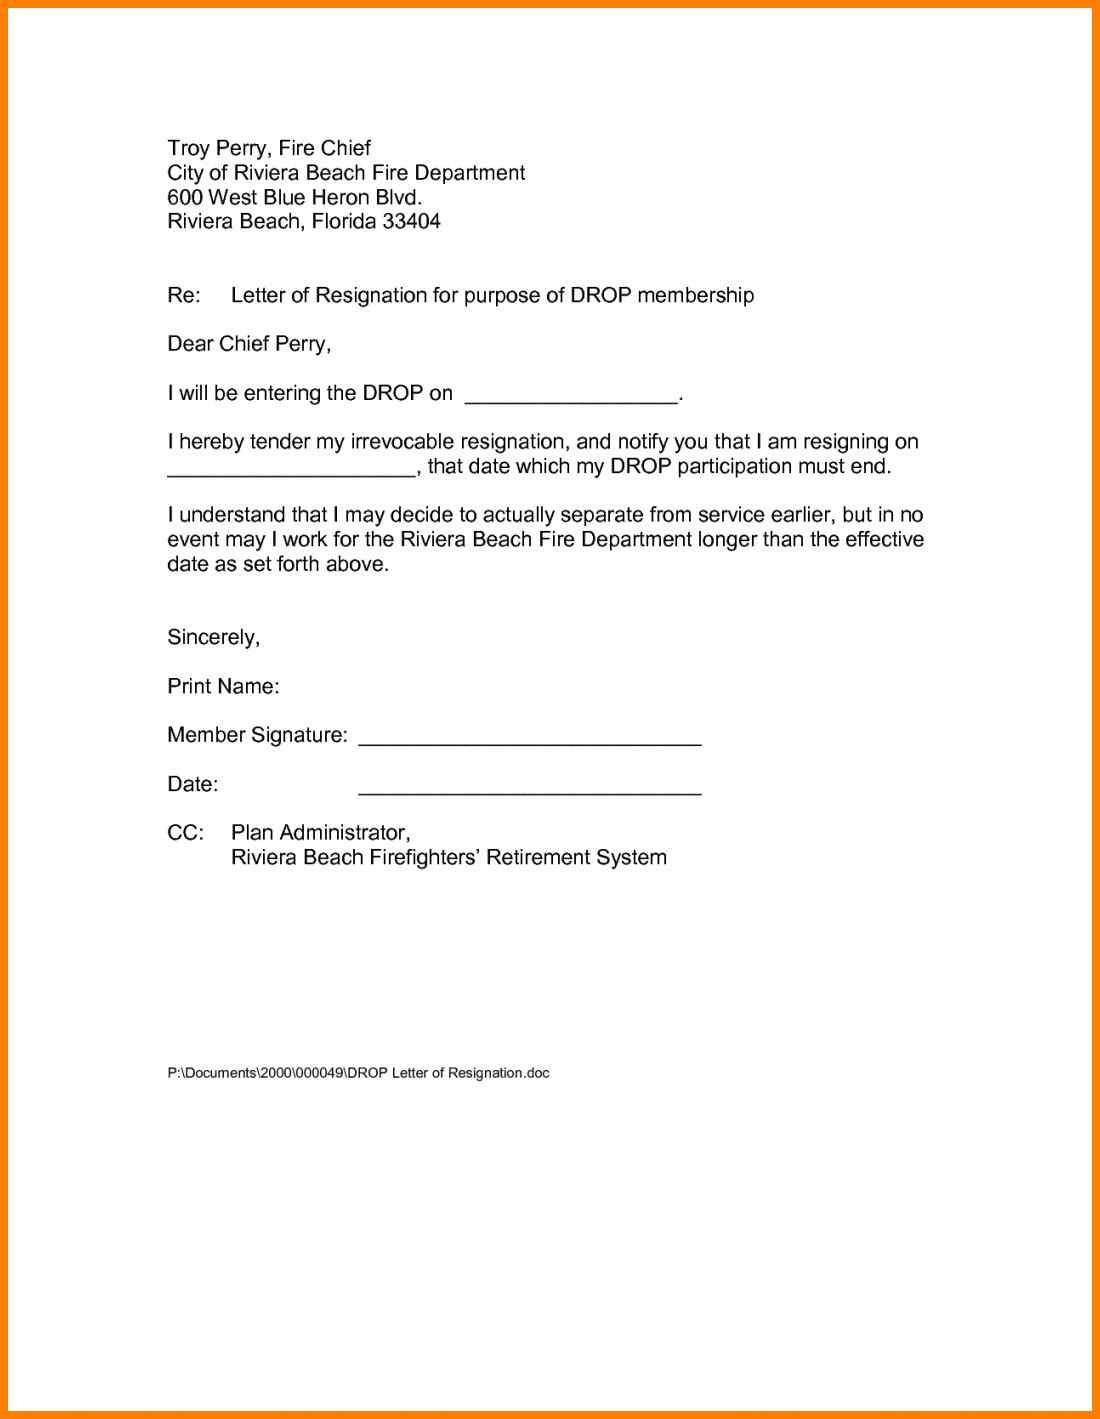 Church Membership Letter Template - Church Resignation Letter Template Image Collections Letter format